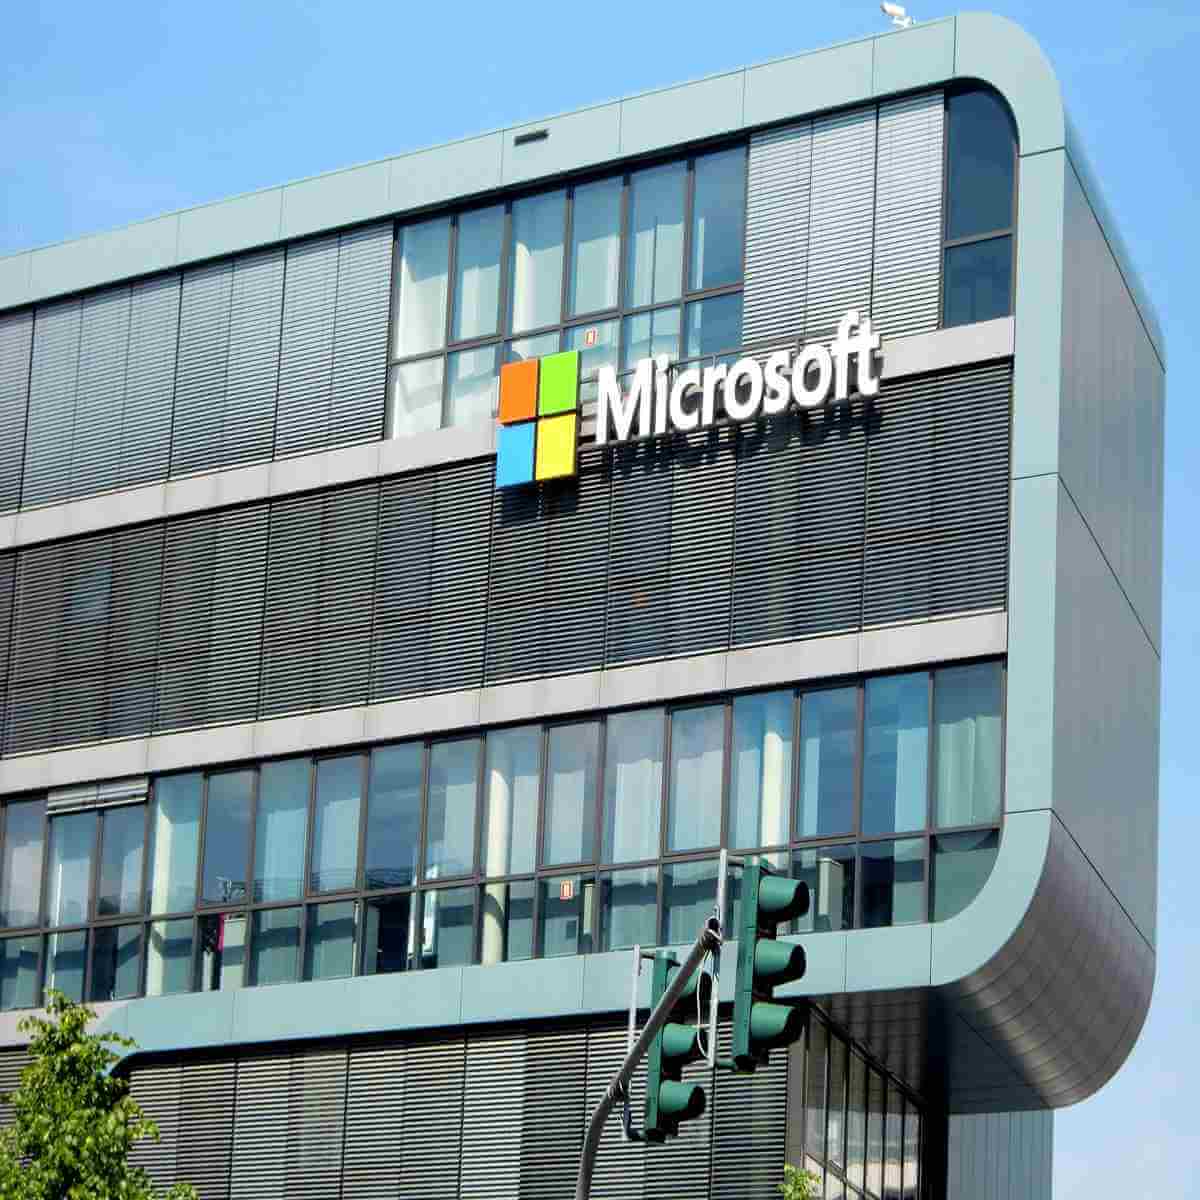 Building facade displaying Microsoft logo